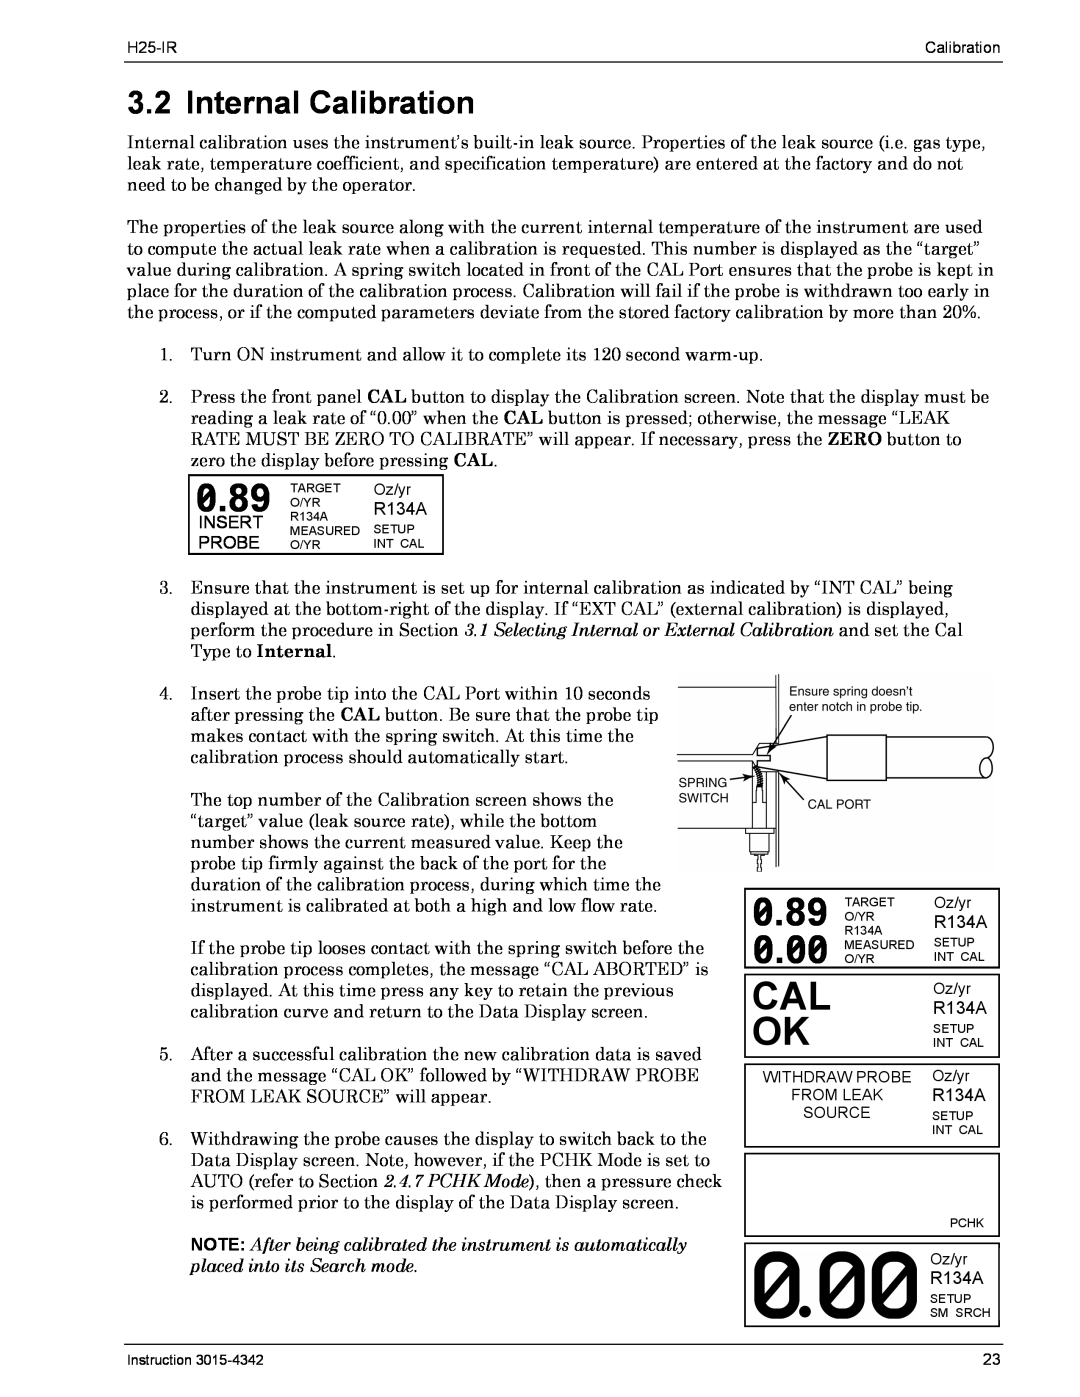 Bacharach H25-IR manual 0.89, 0.00, Internal Calibration 